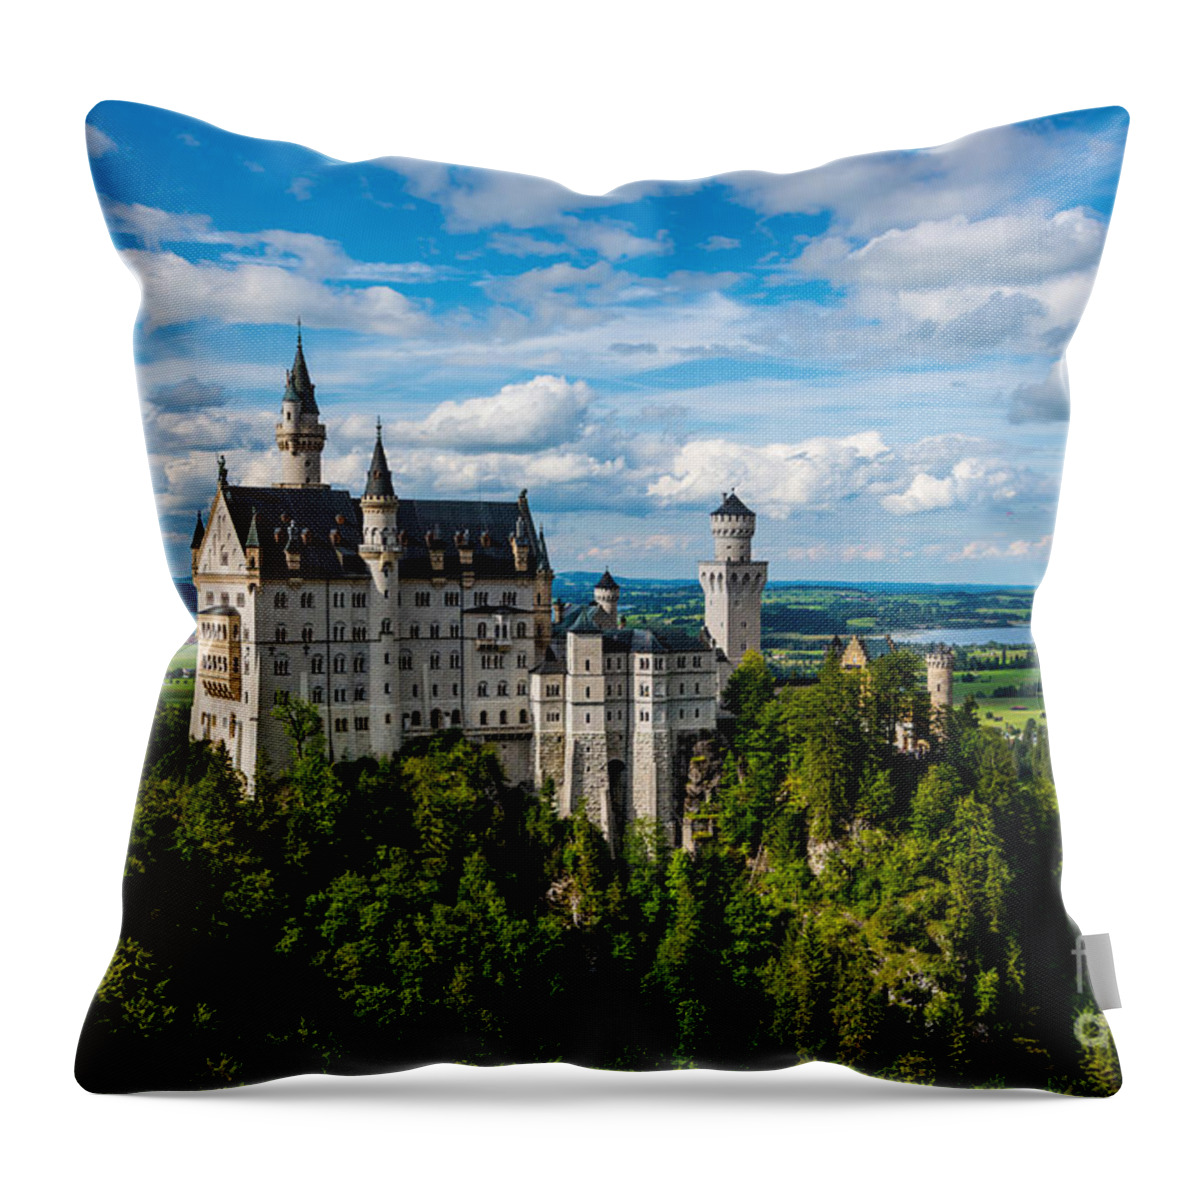 Neuschwanstein Castle Throw Pillow featuring the photograph Neuschwanstein Castle - Bavaria - Germany by Gary Whitton